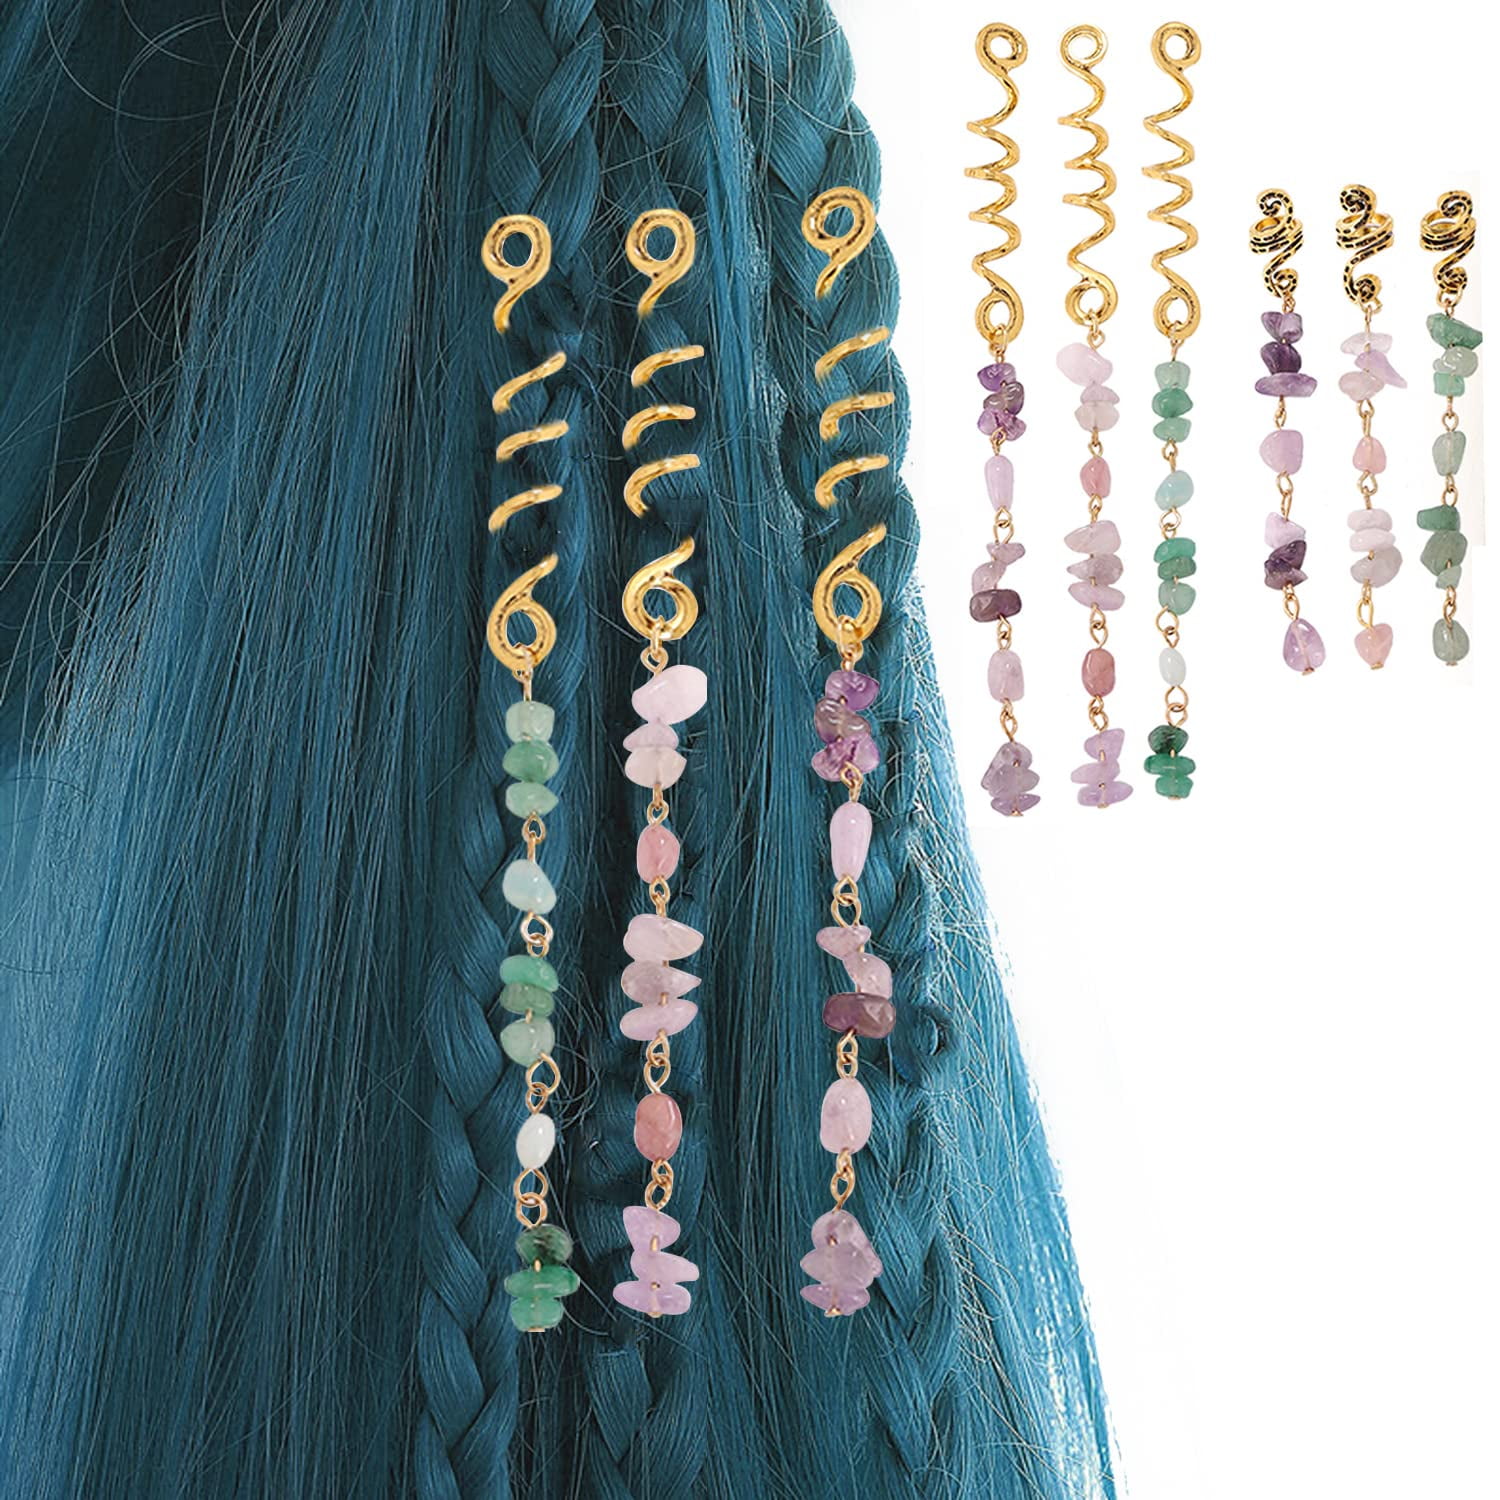 283Pcs Hair Jewelry Braid Rings Cuff Pendants Dreadlocks Beads Accessories  Decor | eBay